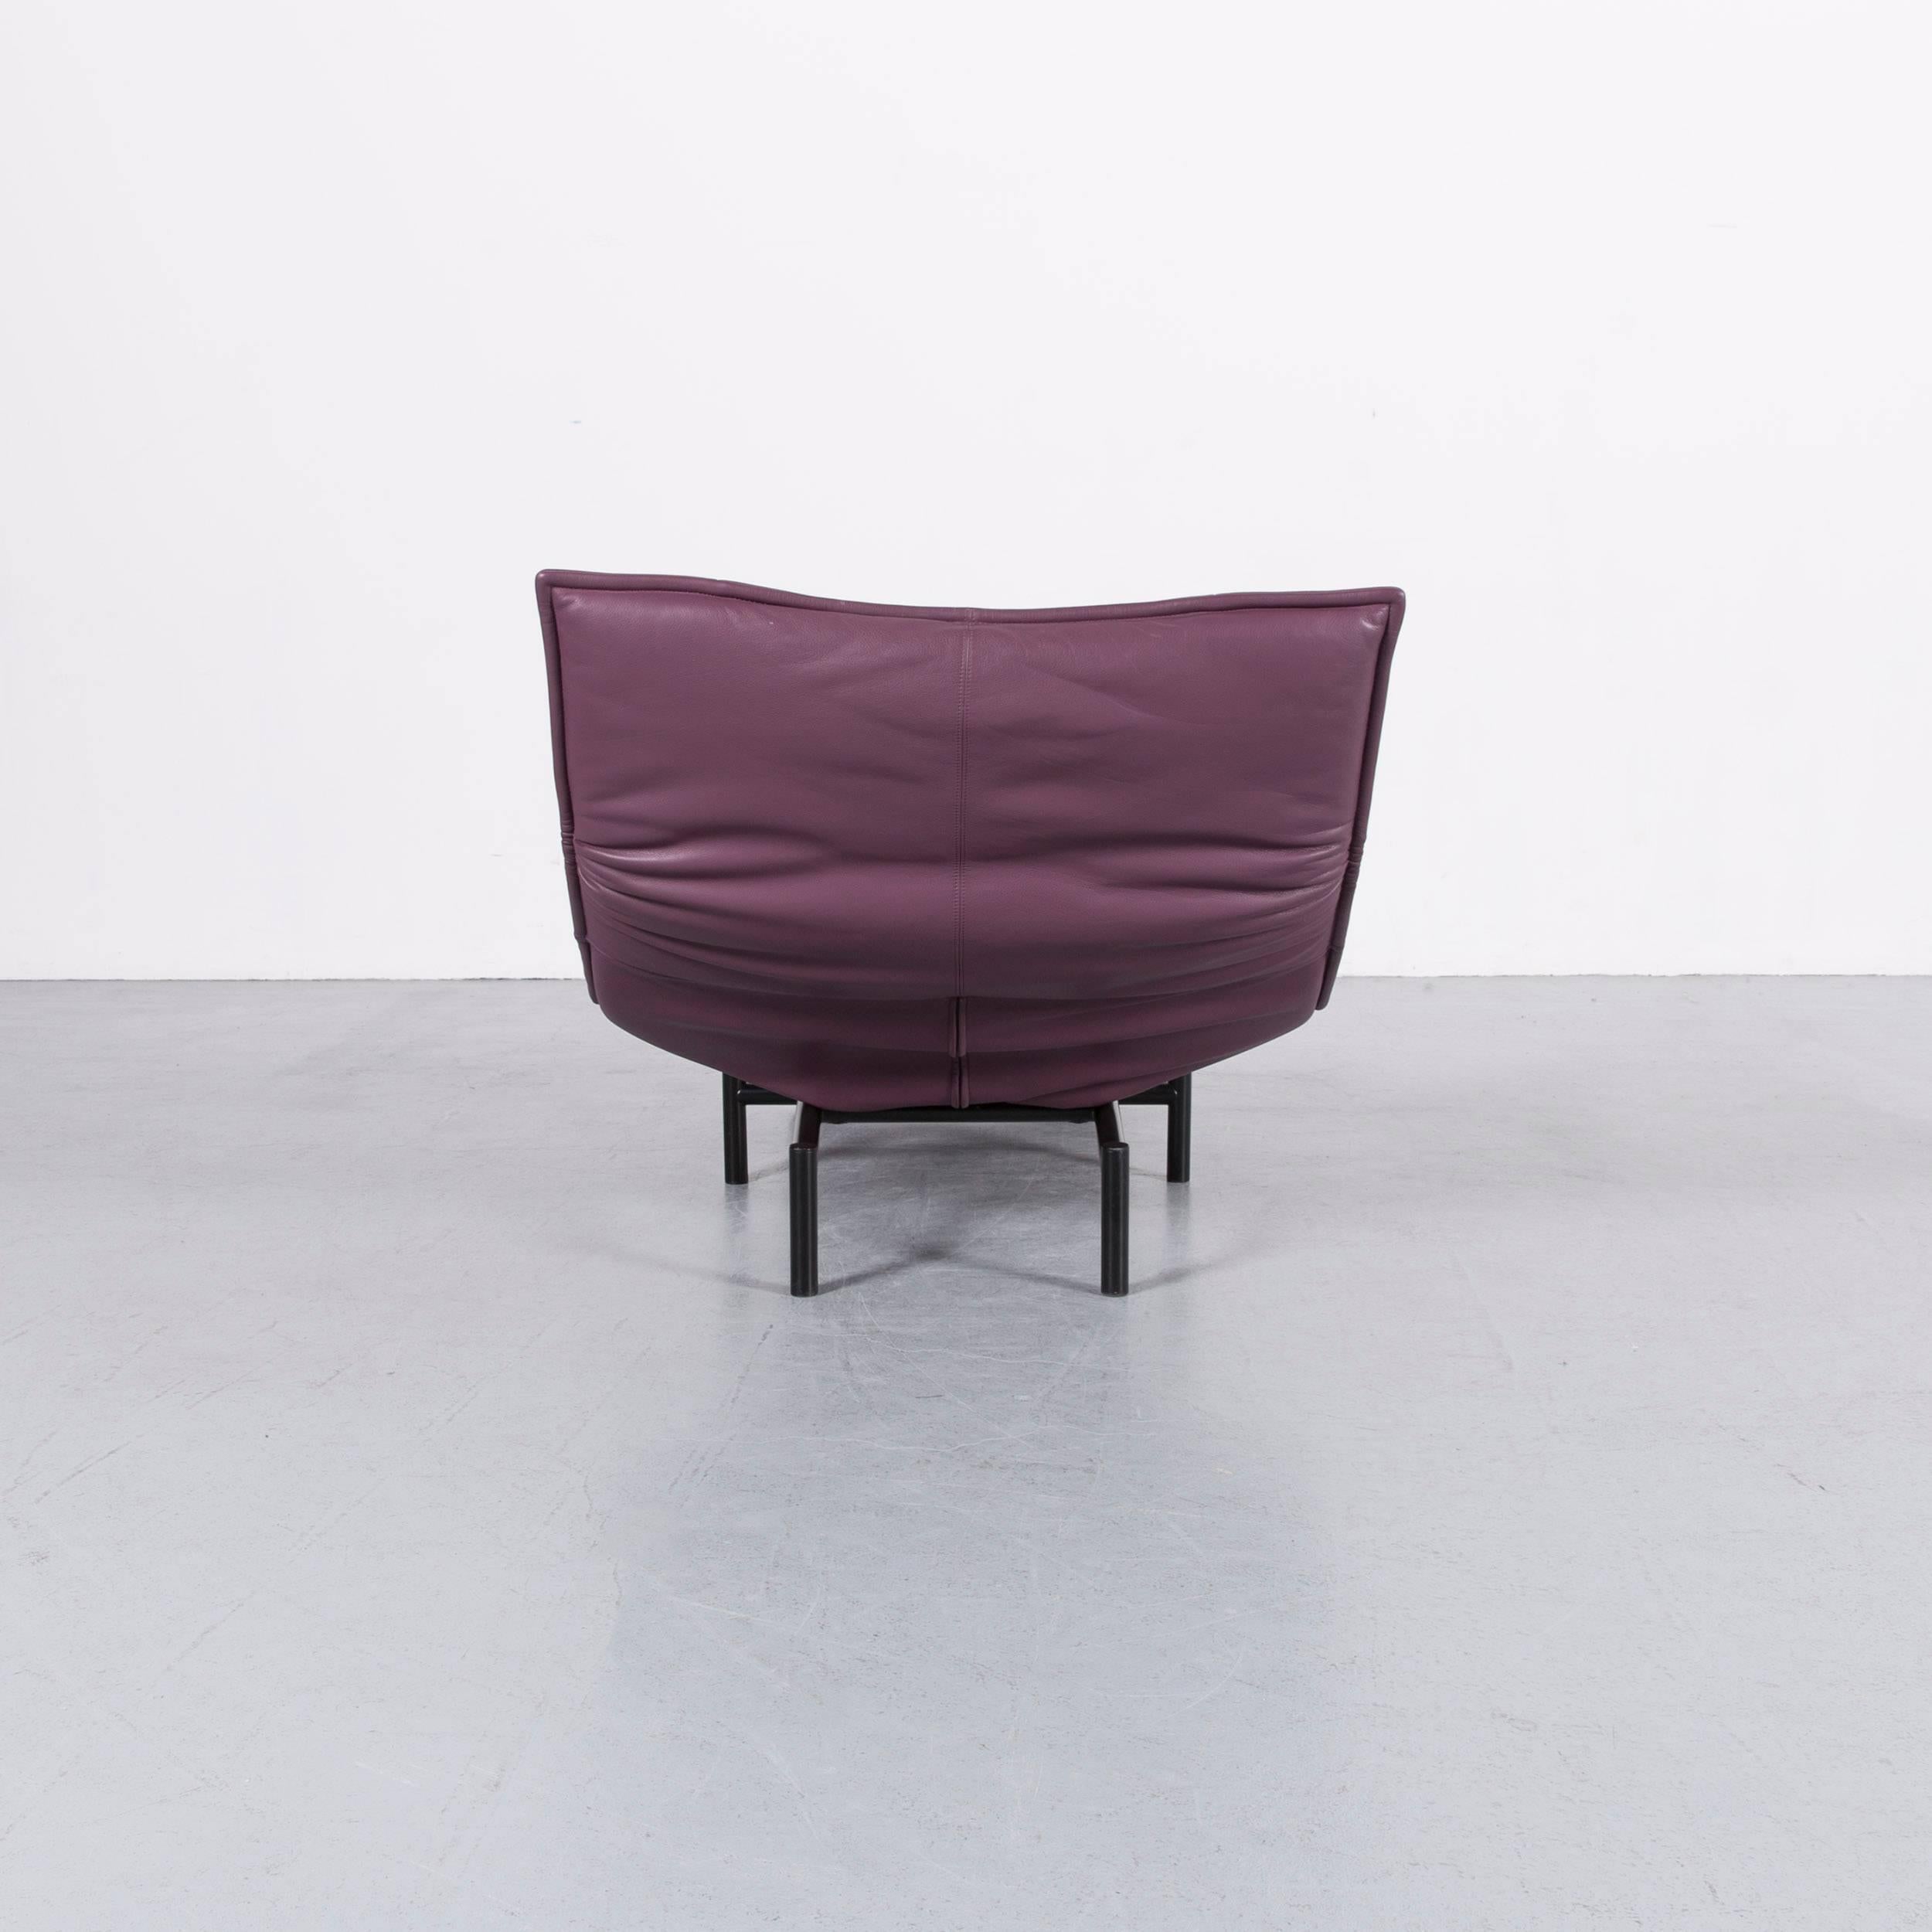 Cassina Veranda Designer Leather Armchair in Purple with Recliner Function 1